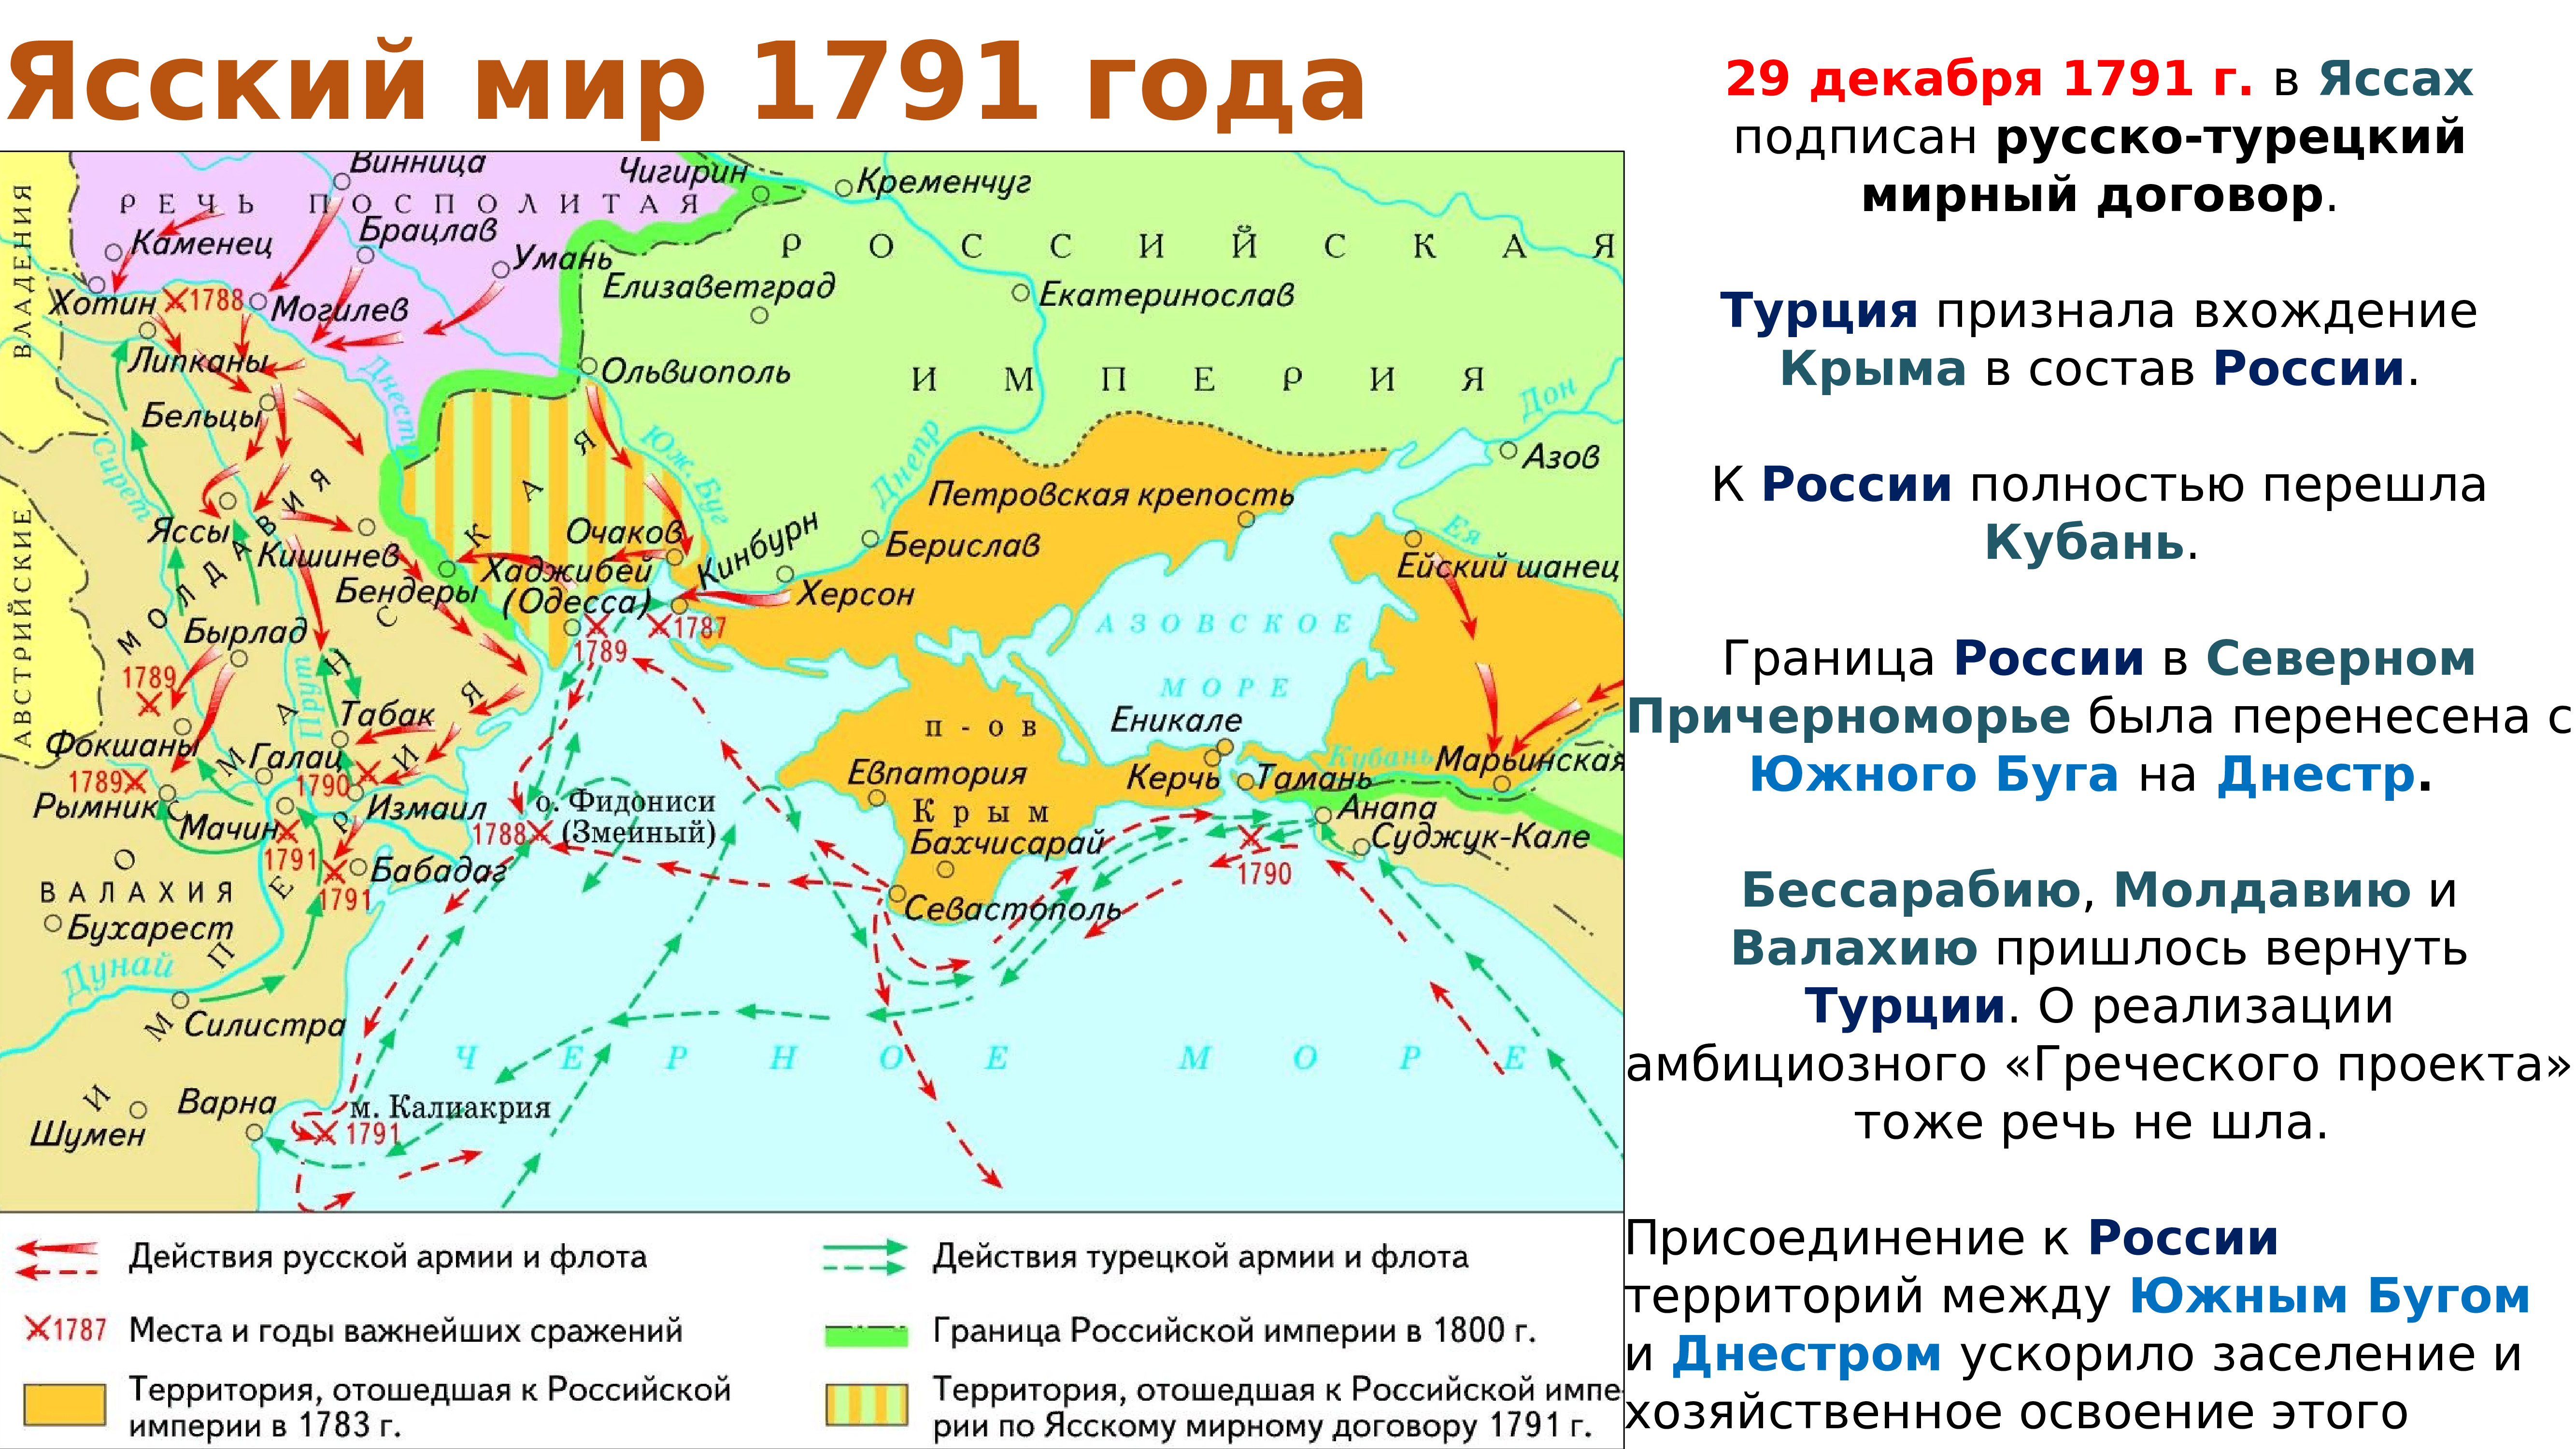 Участники русско турецкой войны 1787 1791. Карта русско-турецкой войны 1787-1791 г.